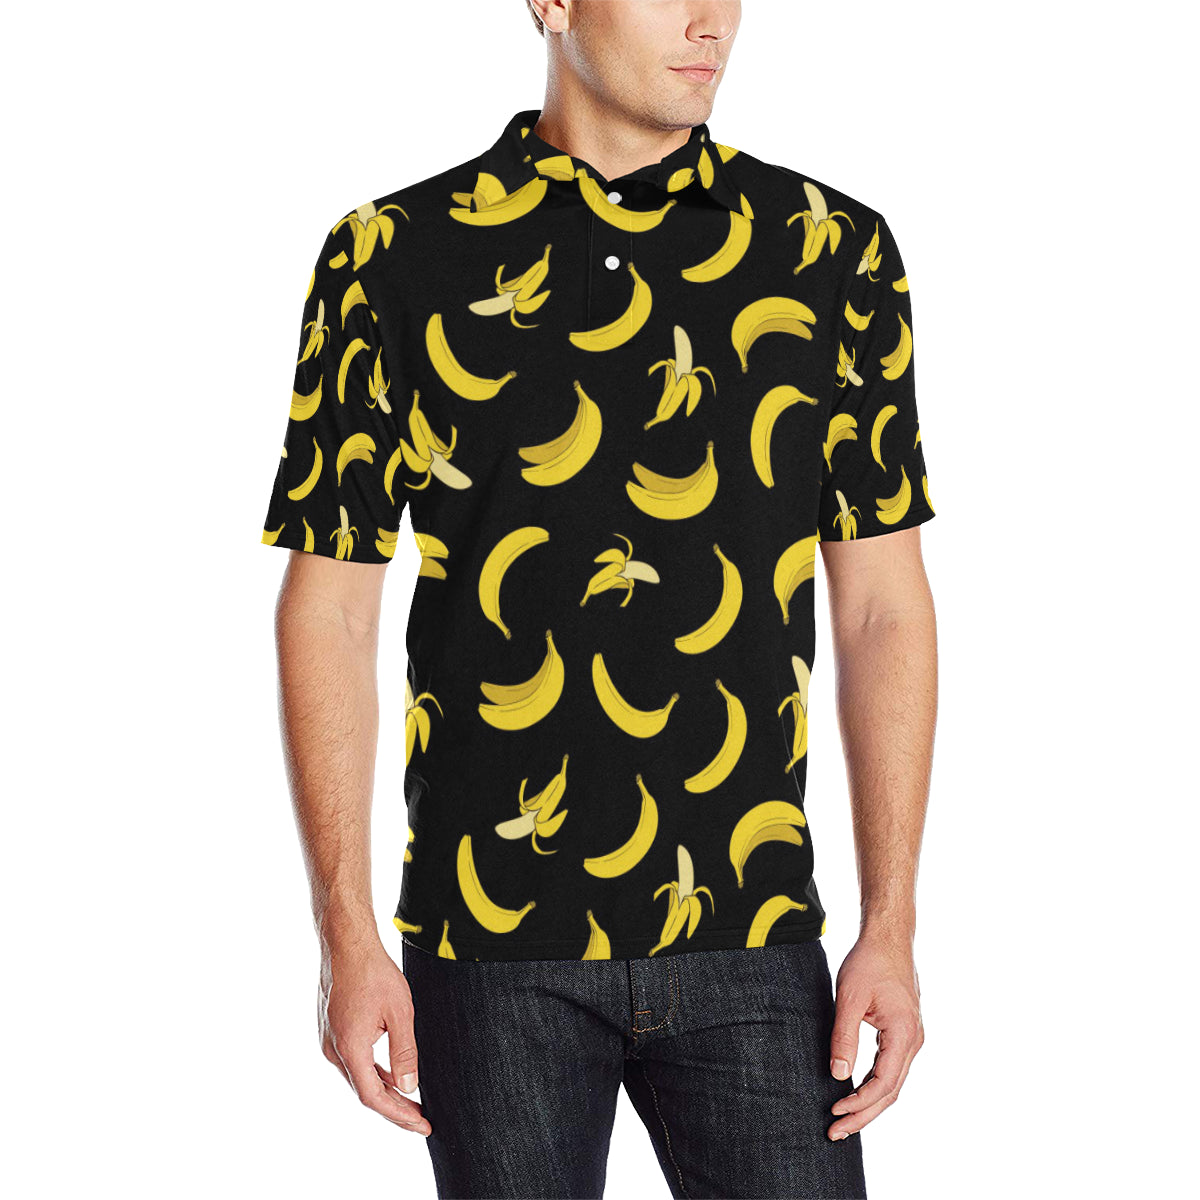 Banana Pattern Print Design BA05 Men Polo Shirt